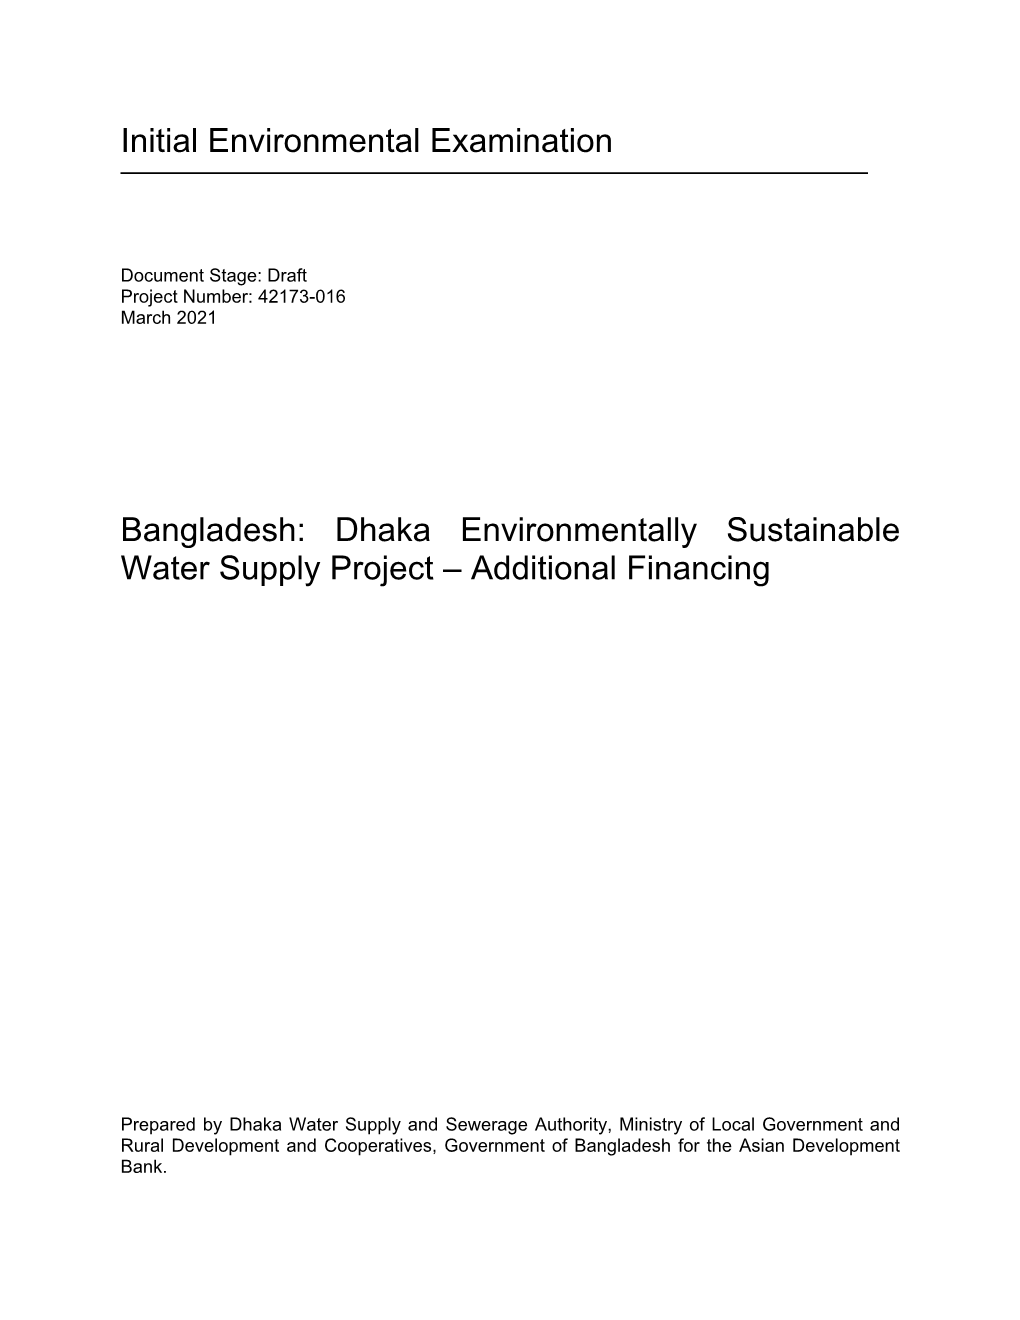 42173-016: Dhaka Environmentally